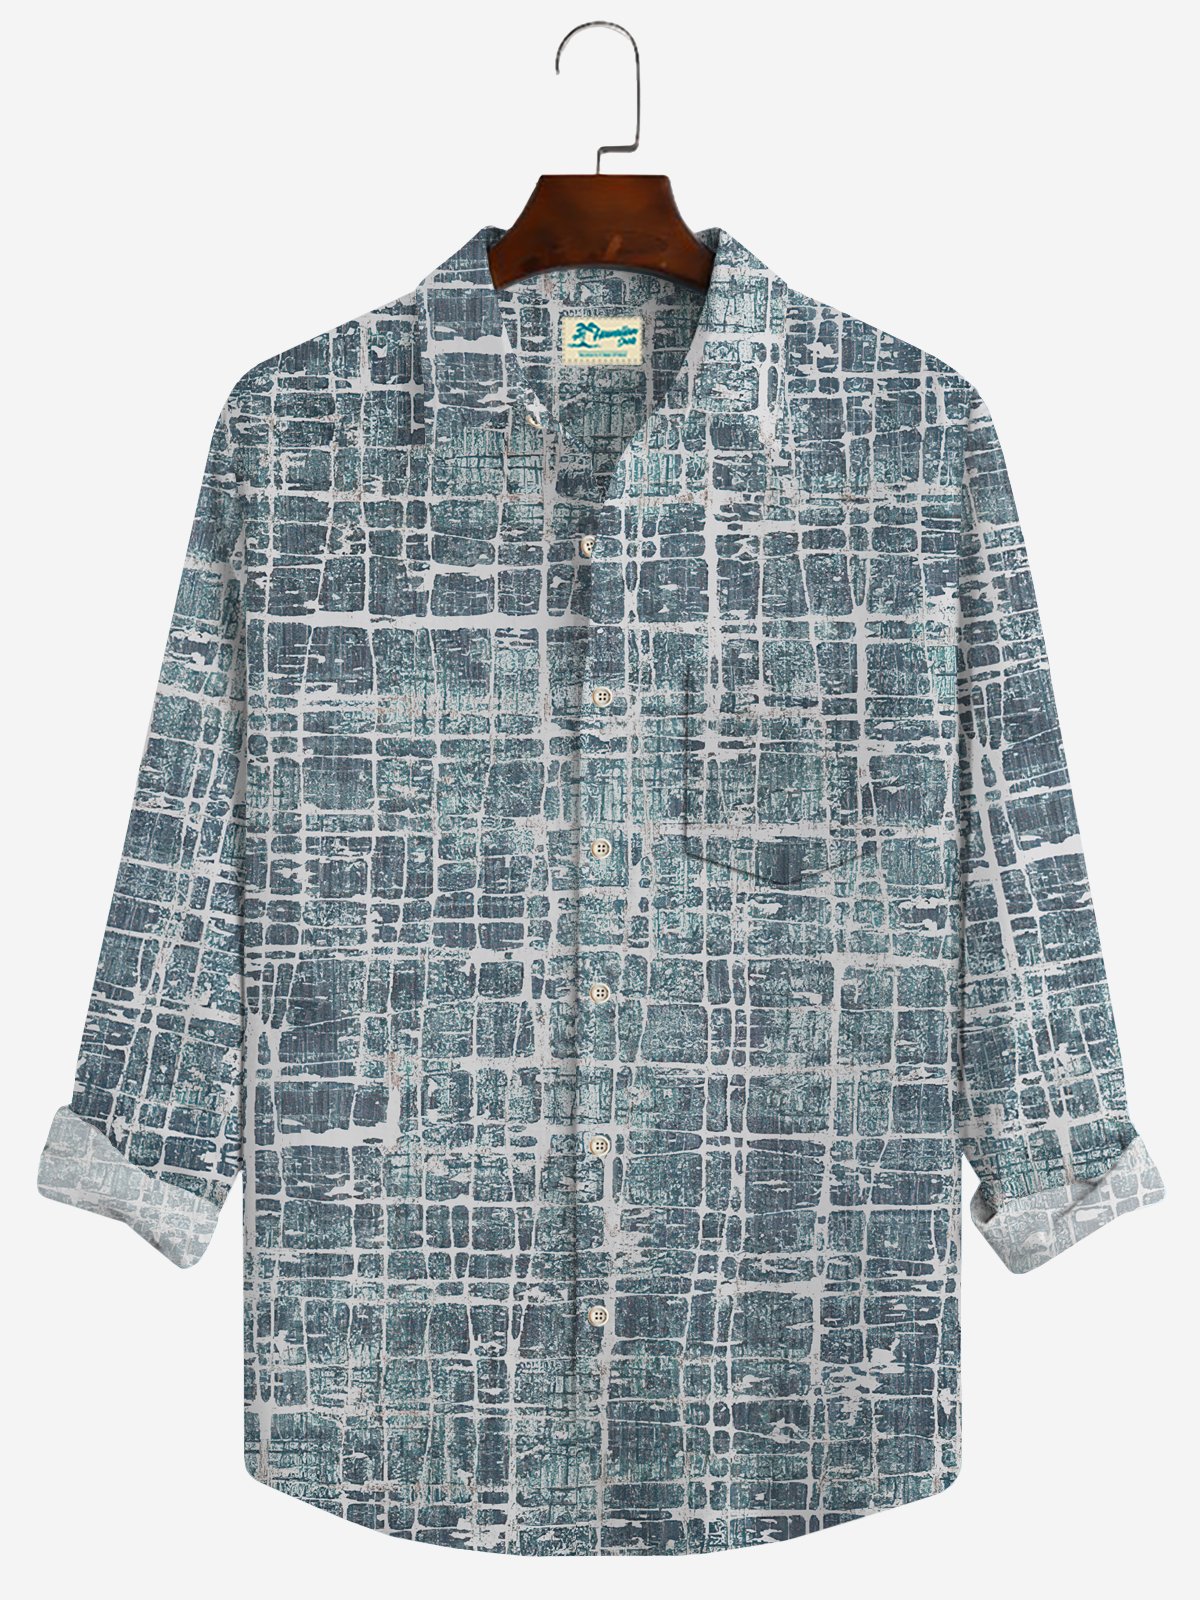 JoyMitty 50’s Vintage Check Blue Men's Casual Long Sleeve Shirts Stretch Wrinkle Free Seersucker Aloha Button Pocket Shirts